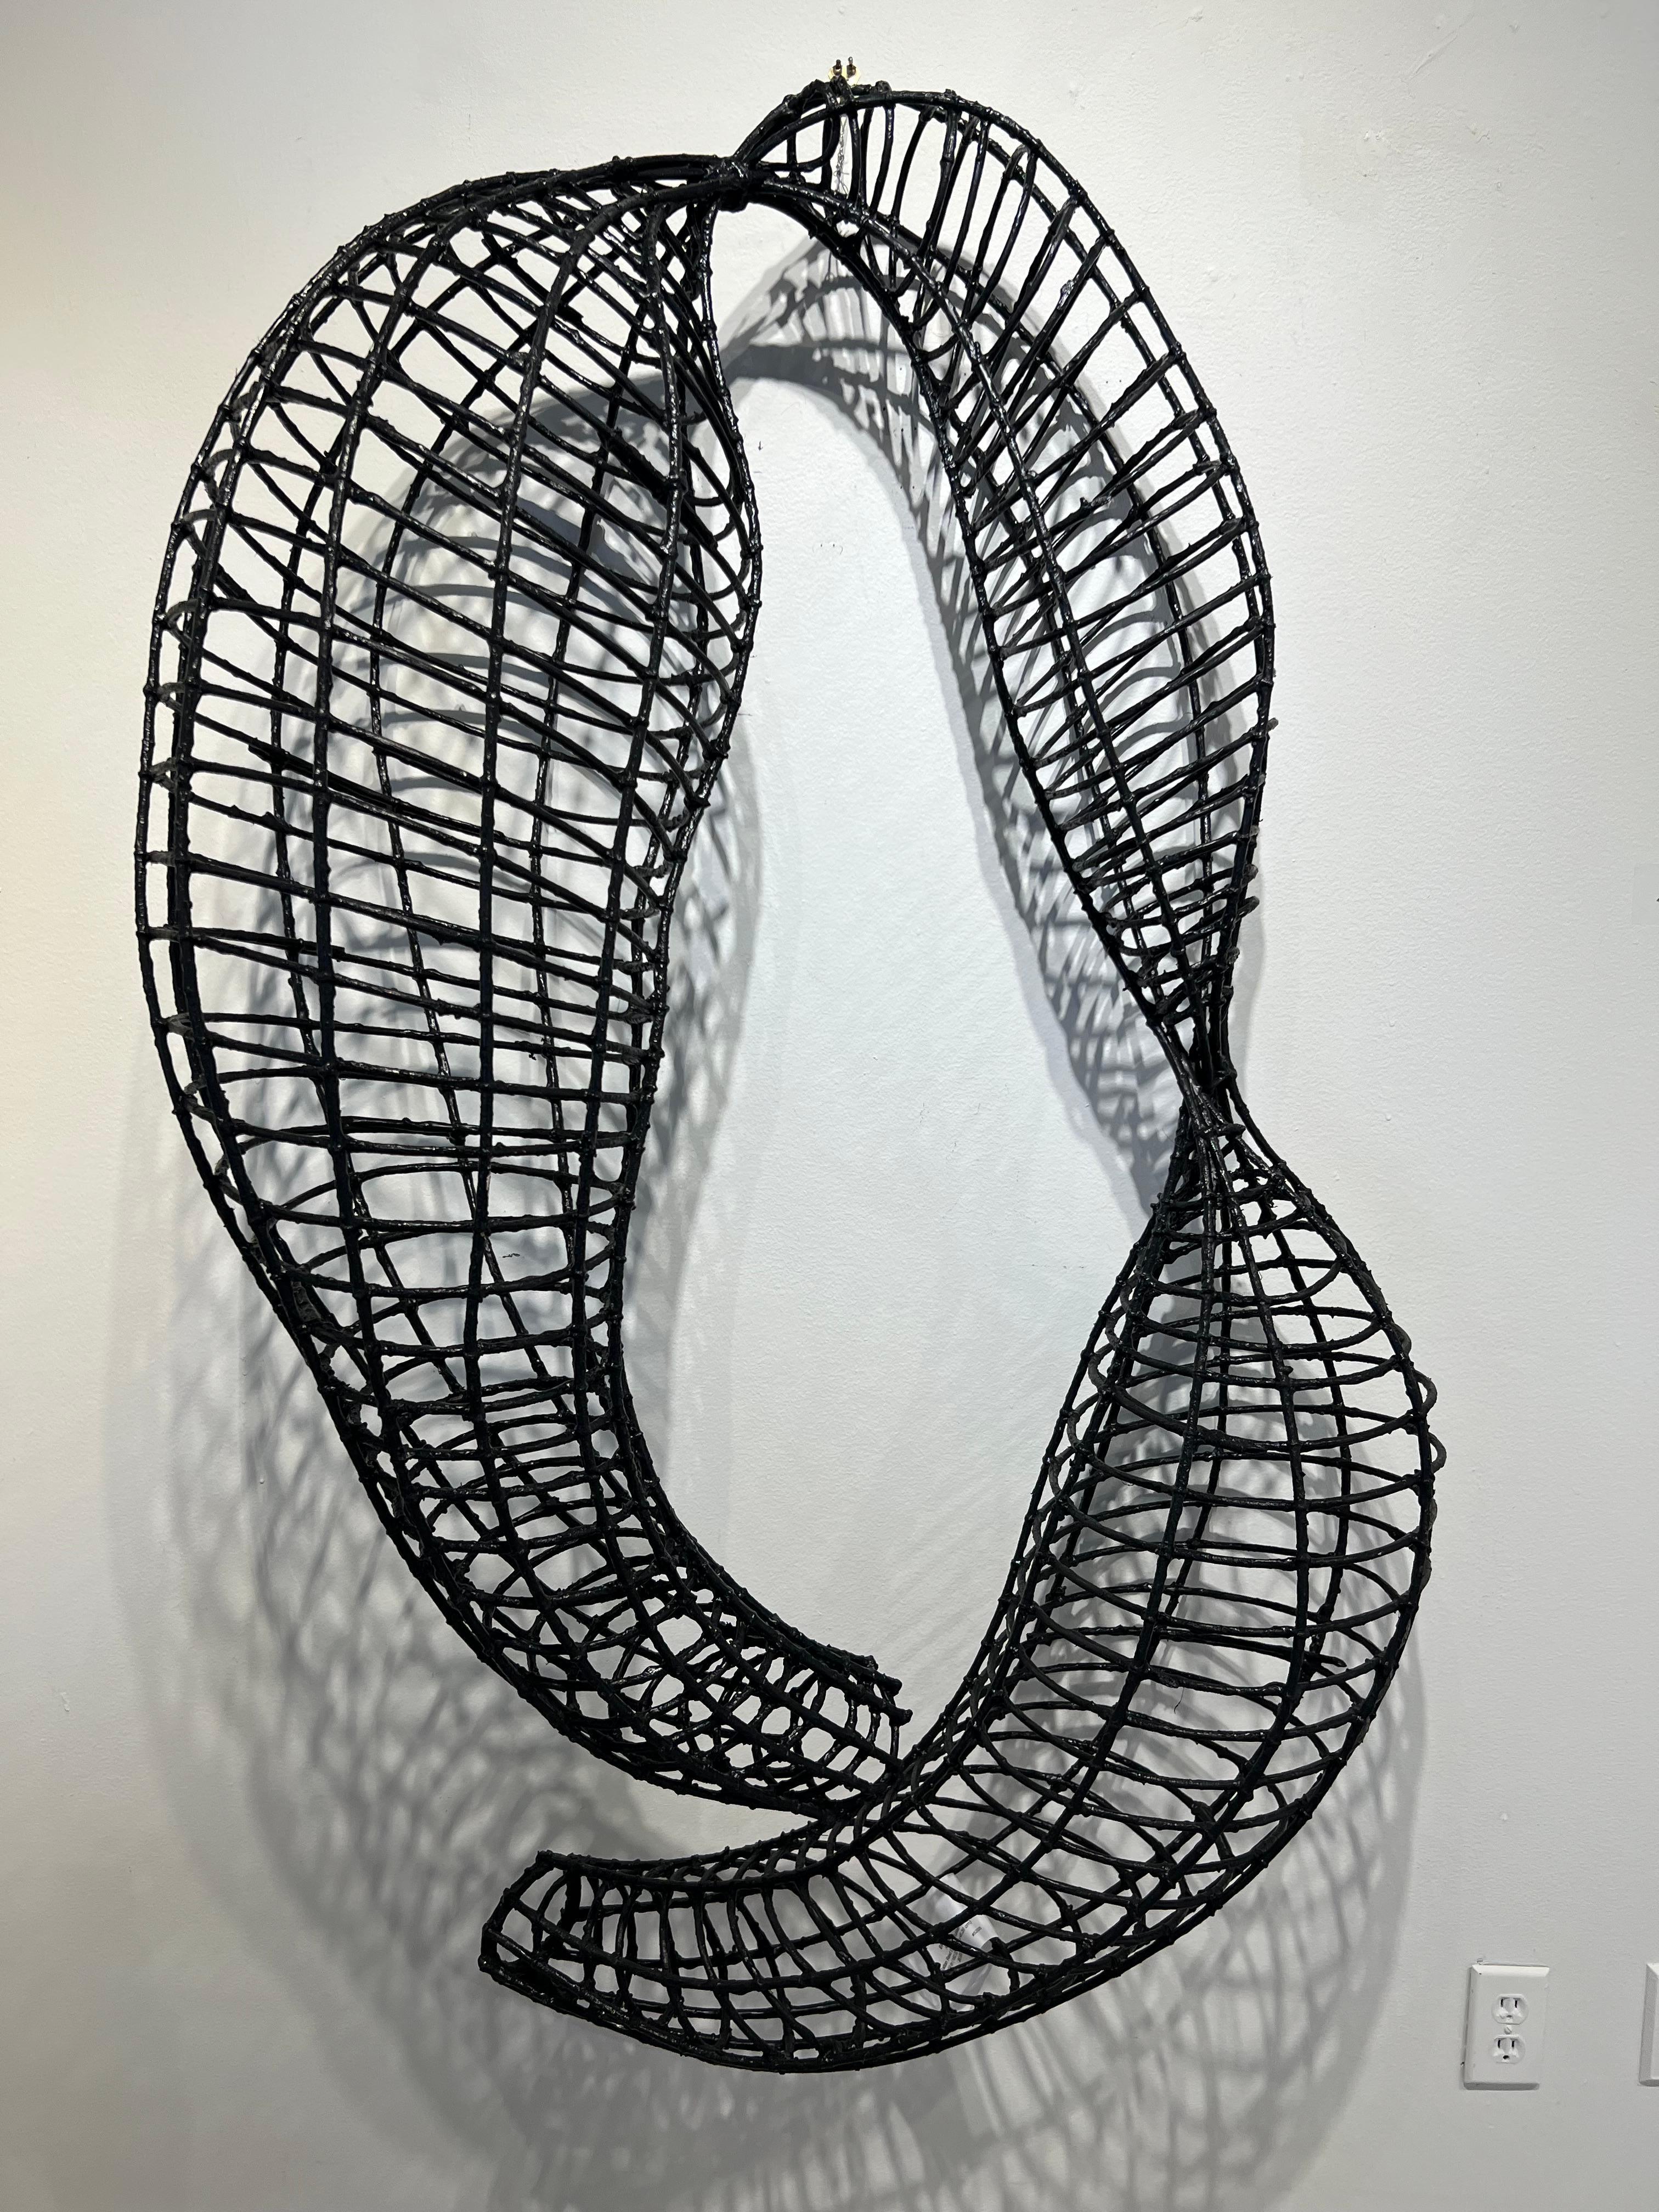 Release - Sculpture by Eileen Braun